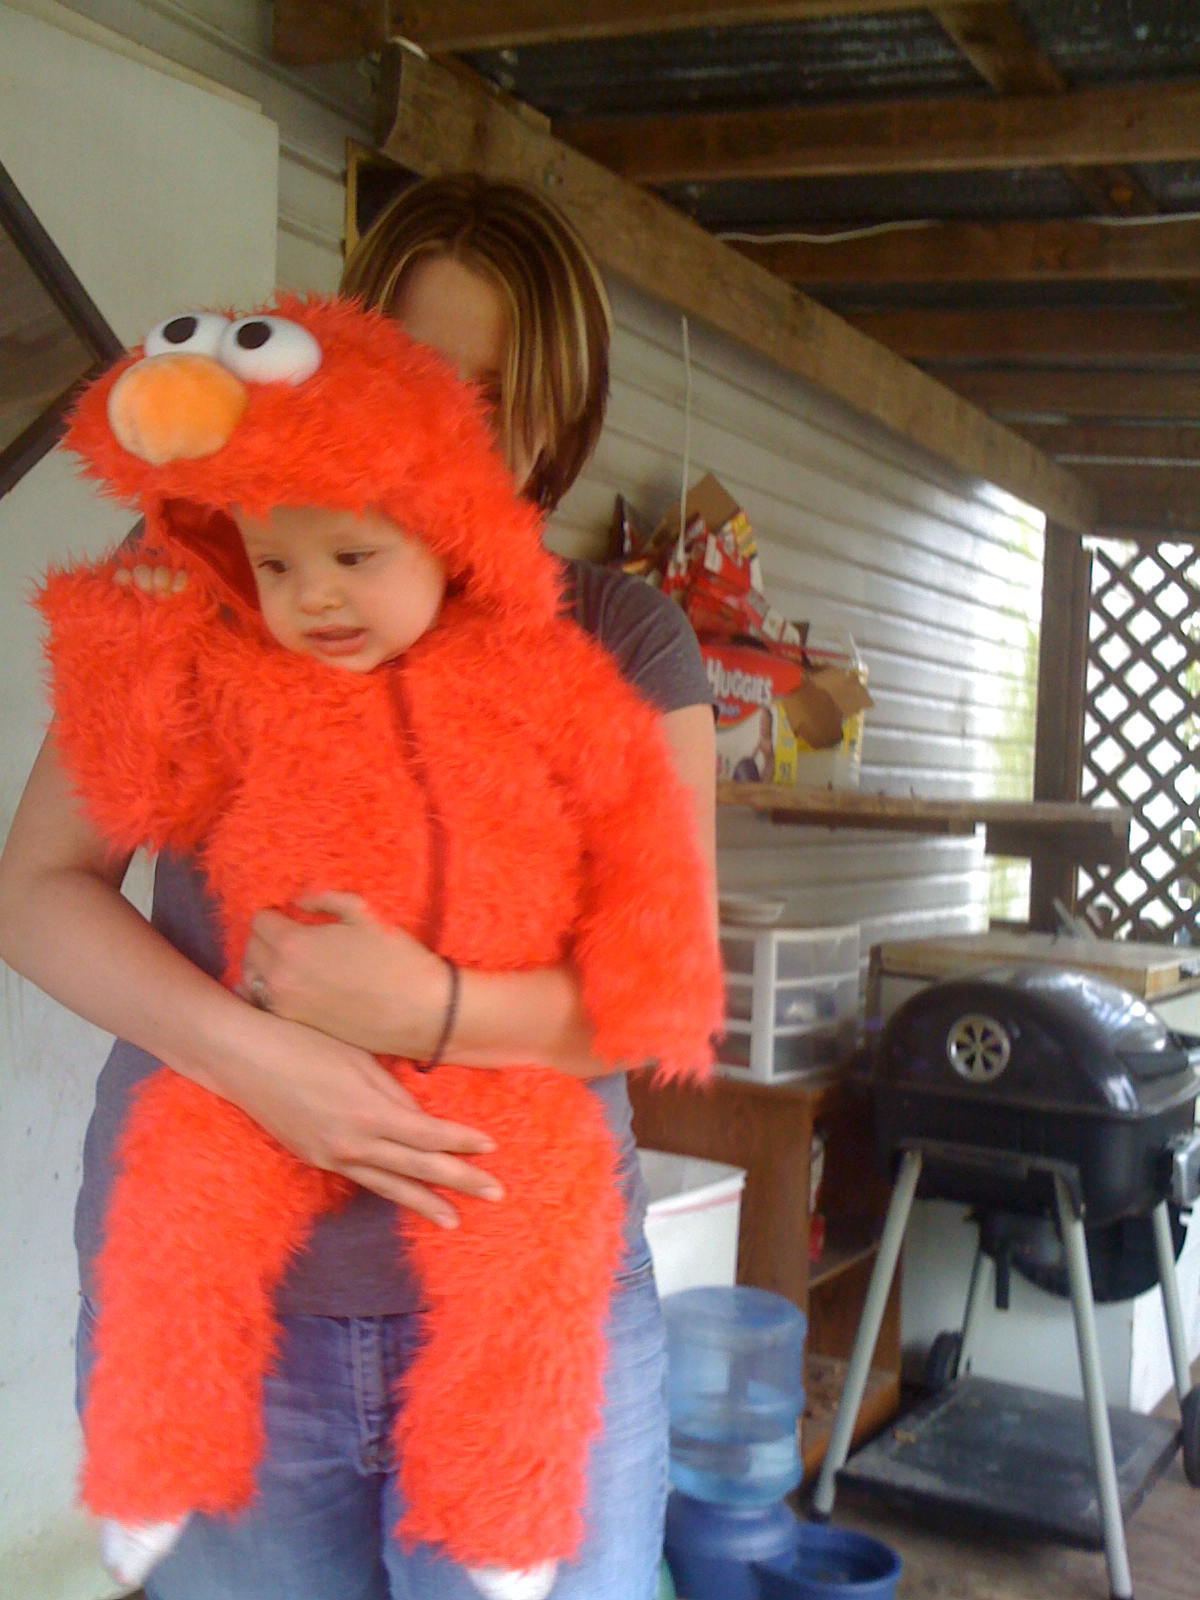 Elmo ate my bebe!